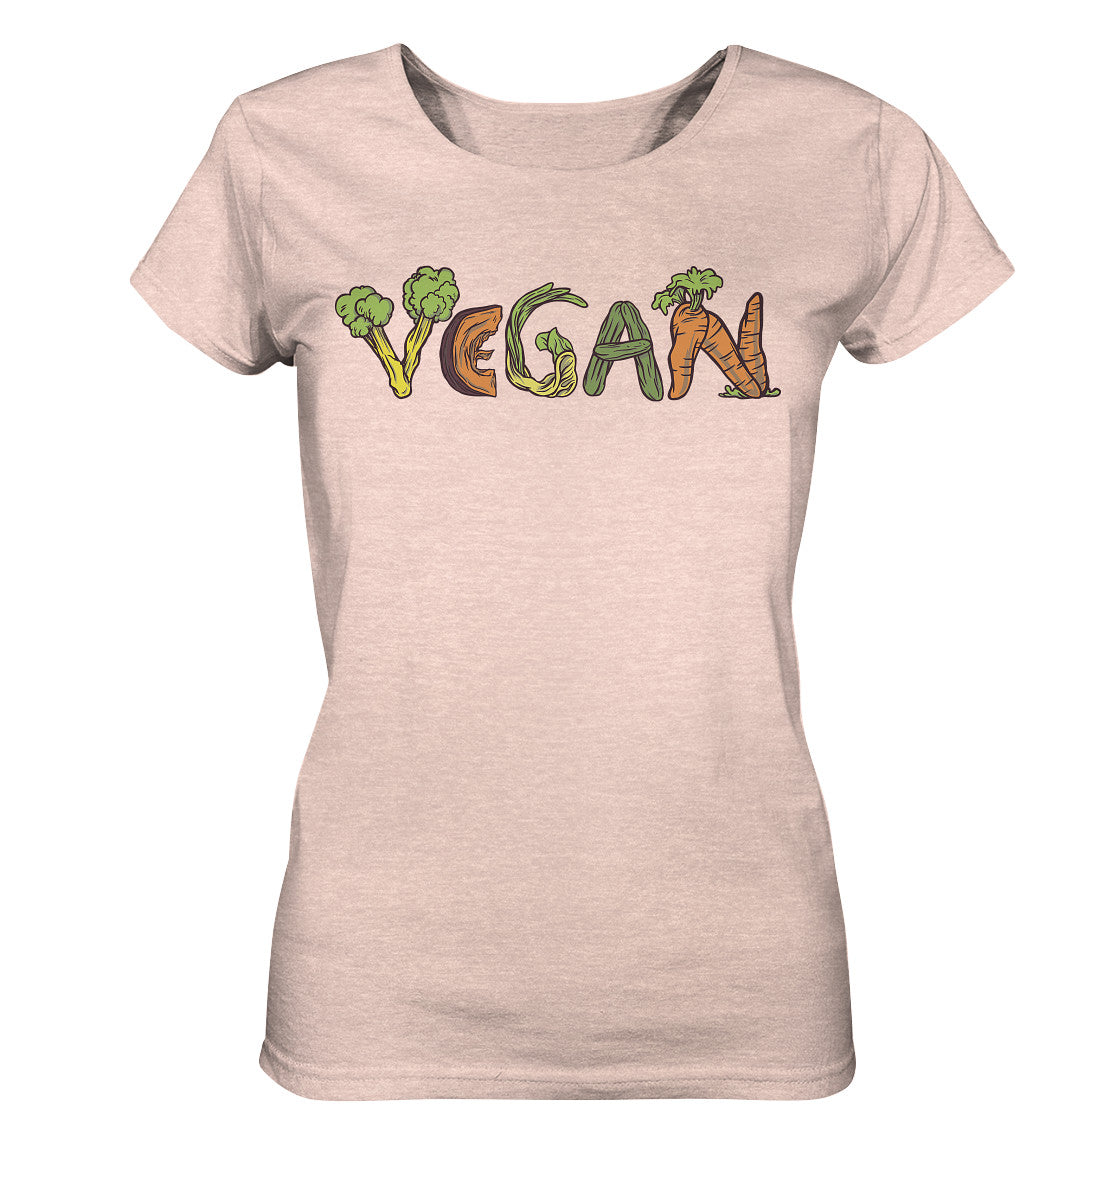 Vegan - Damen Bio Shirt (meliert)